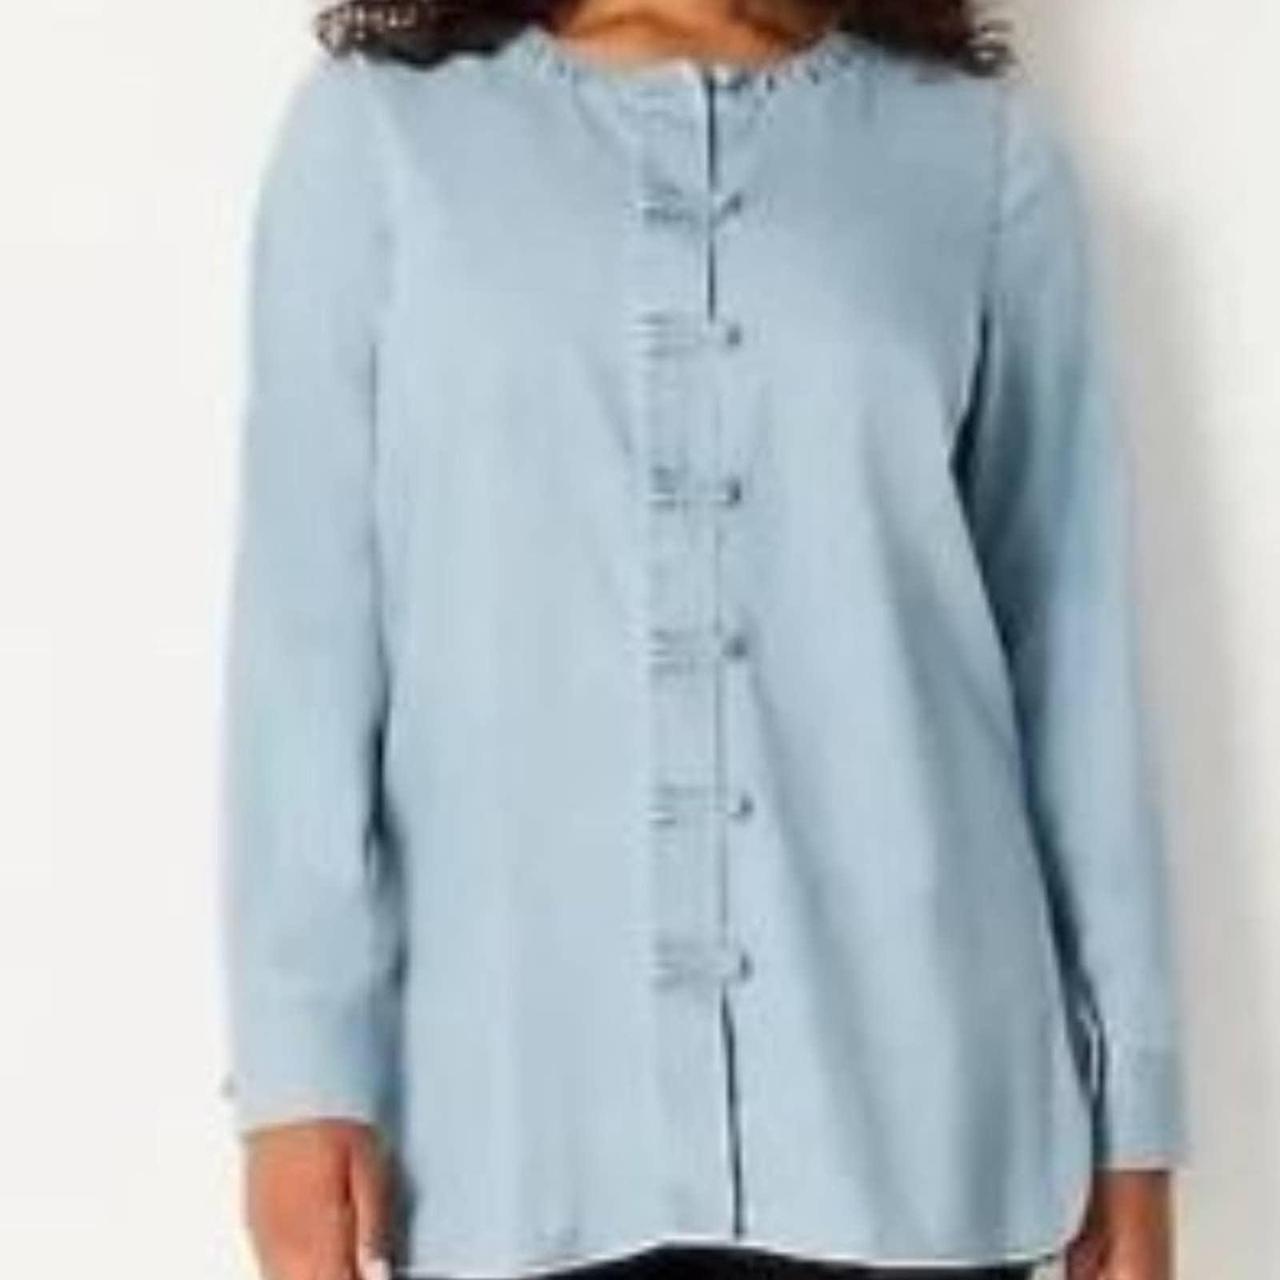 J. Jill Bristol Chambray Denim Shirt Top Blouse Blue Large Tunic Style